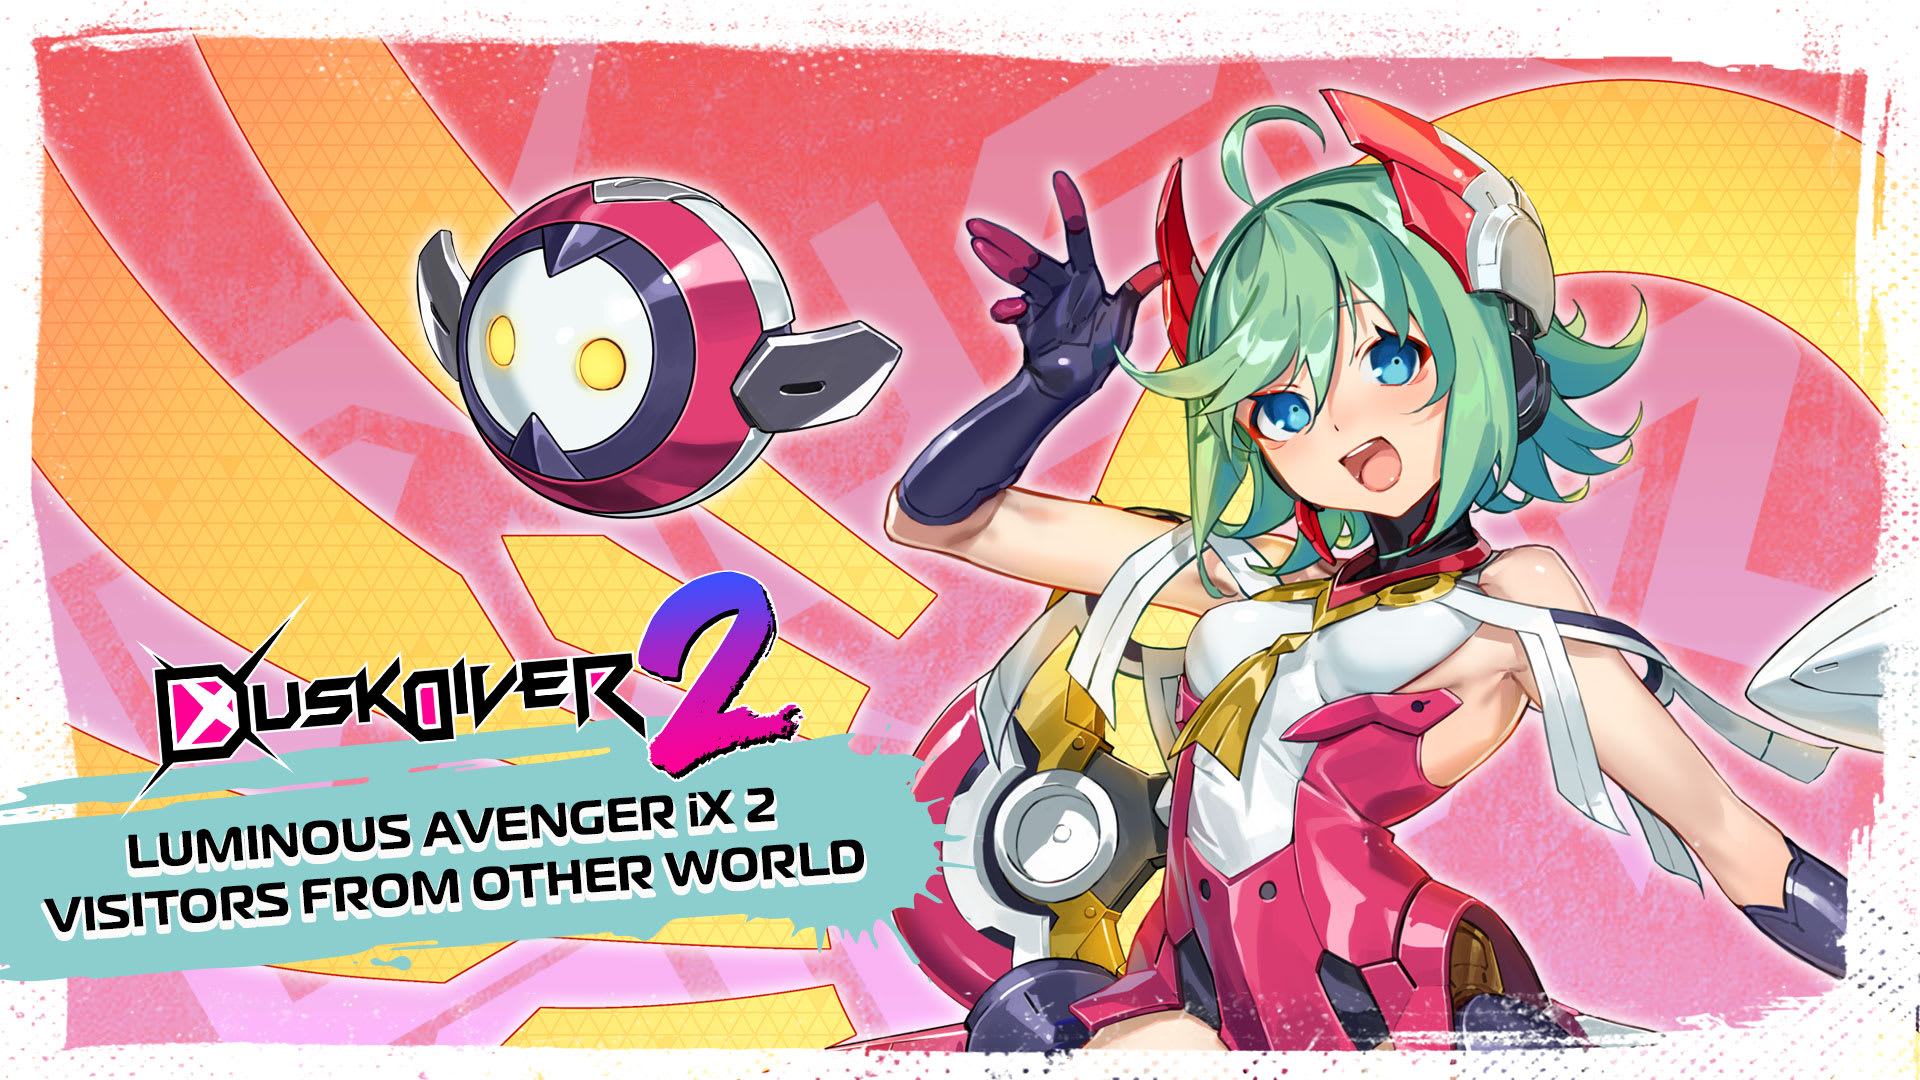 Luminous Avenger iX 2 - Visitors from Other World